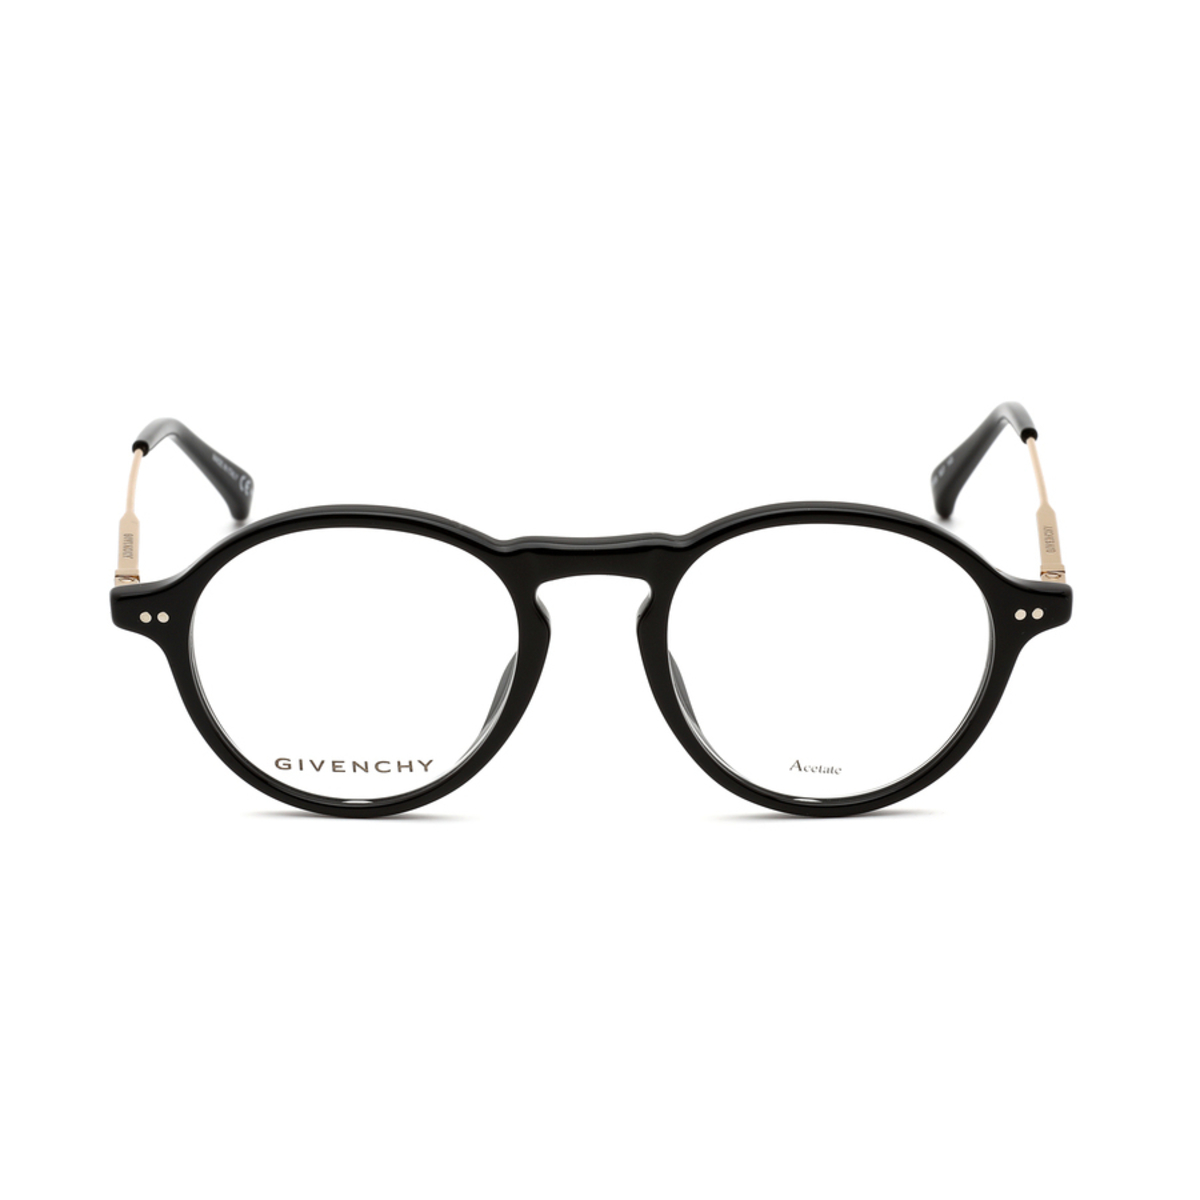 Givenchy Mens Black Round Eyeglass Frames GV010008070047